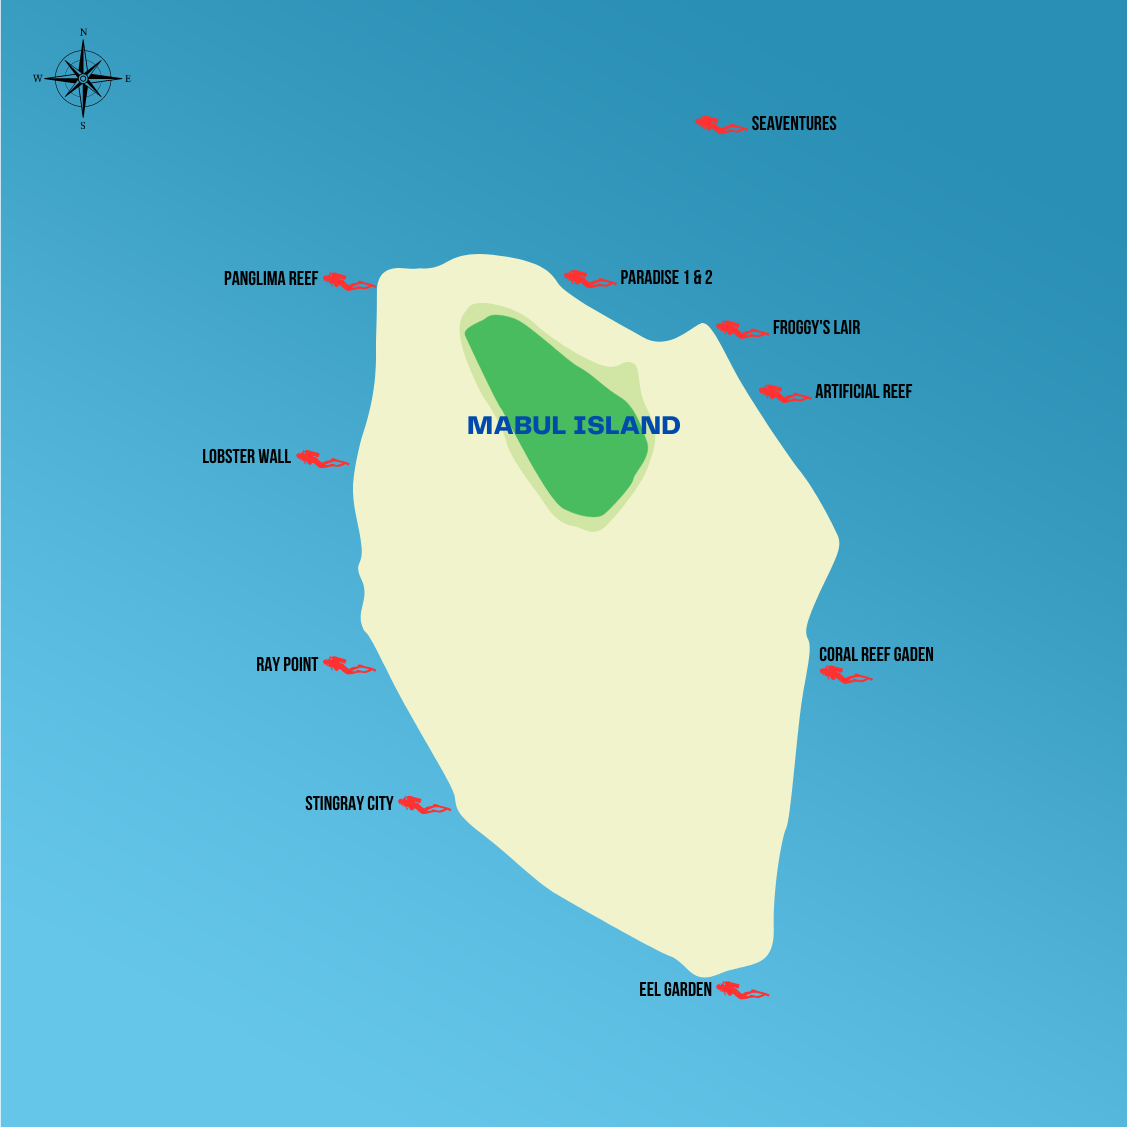 Mabul Island